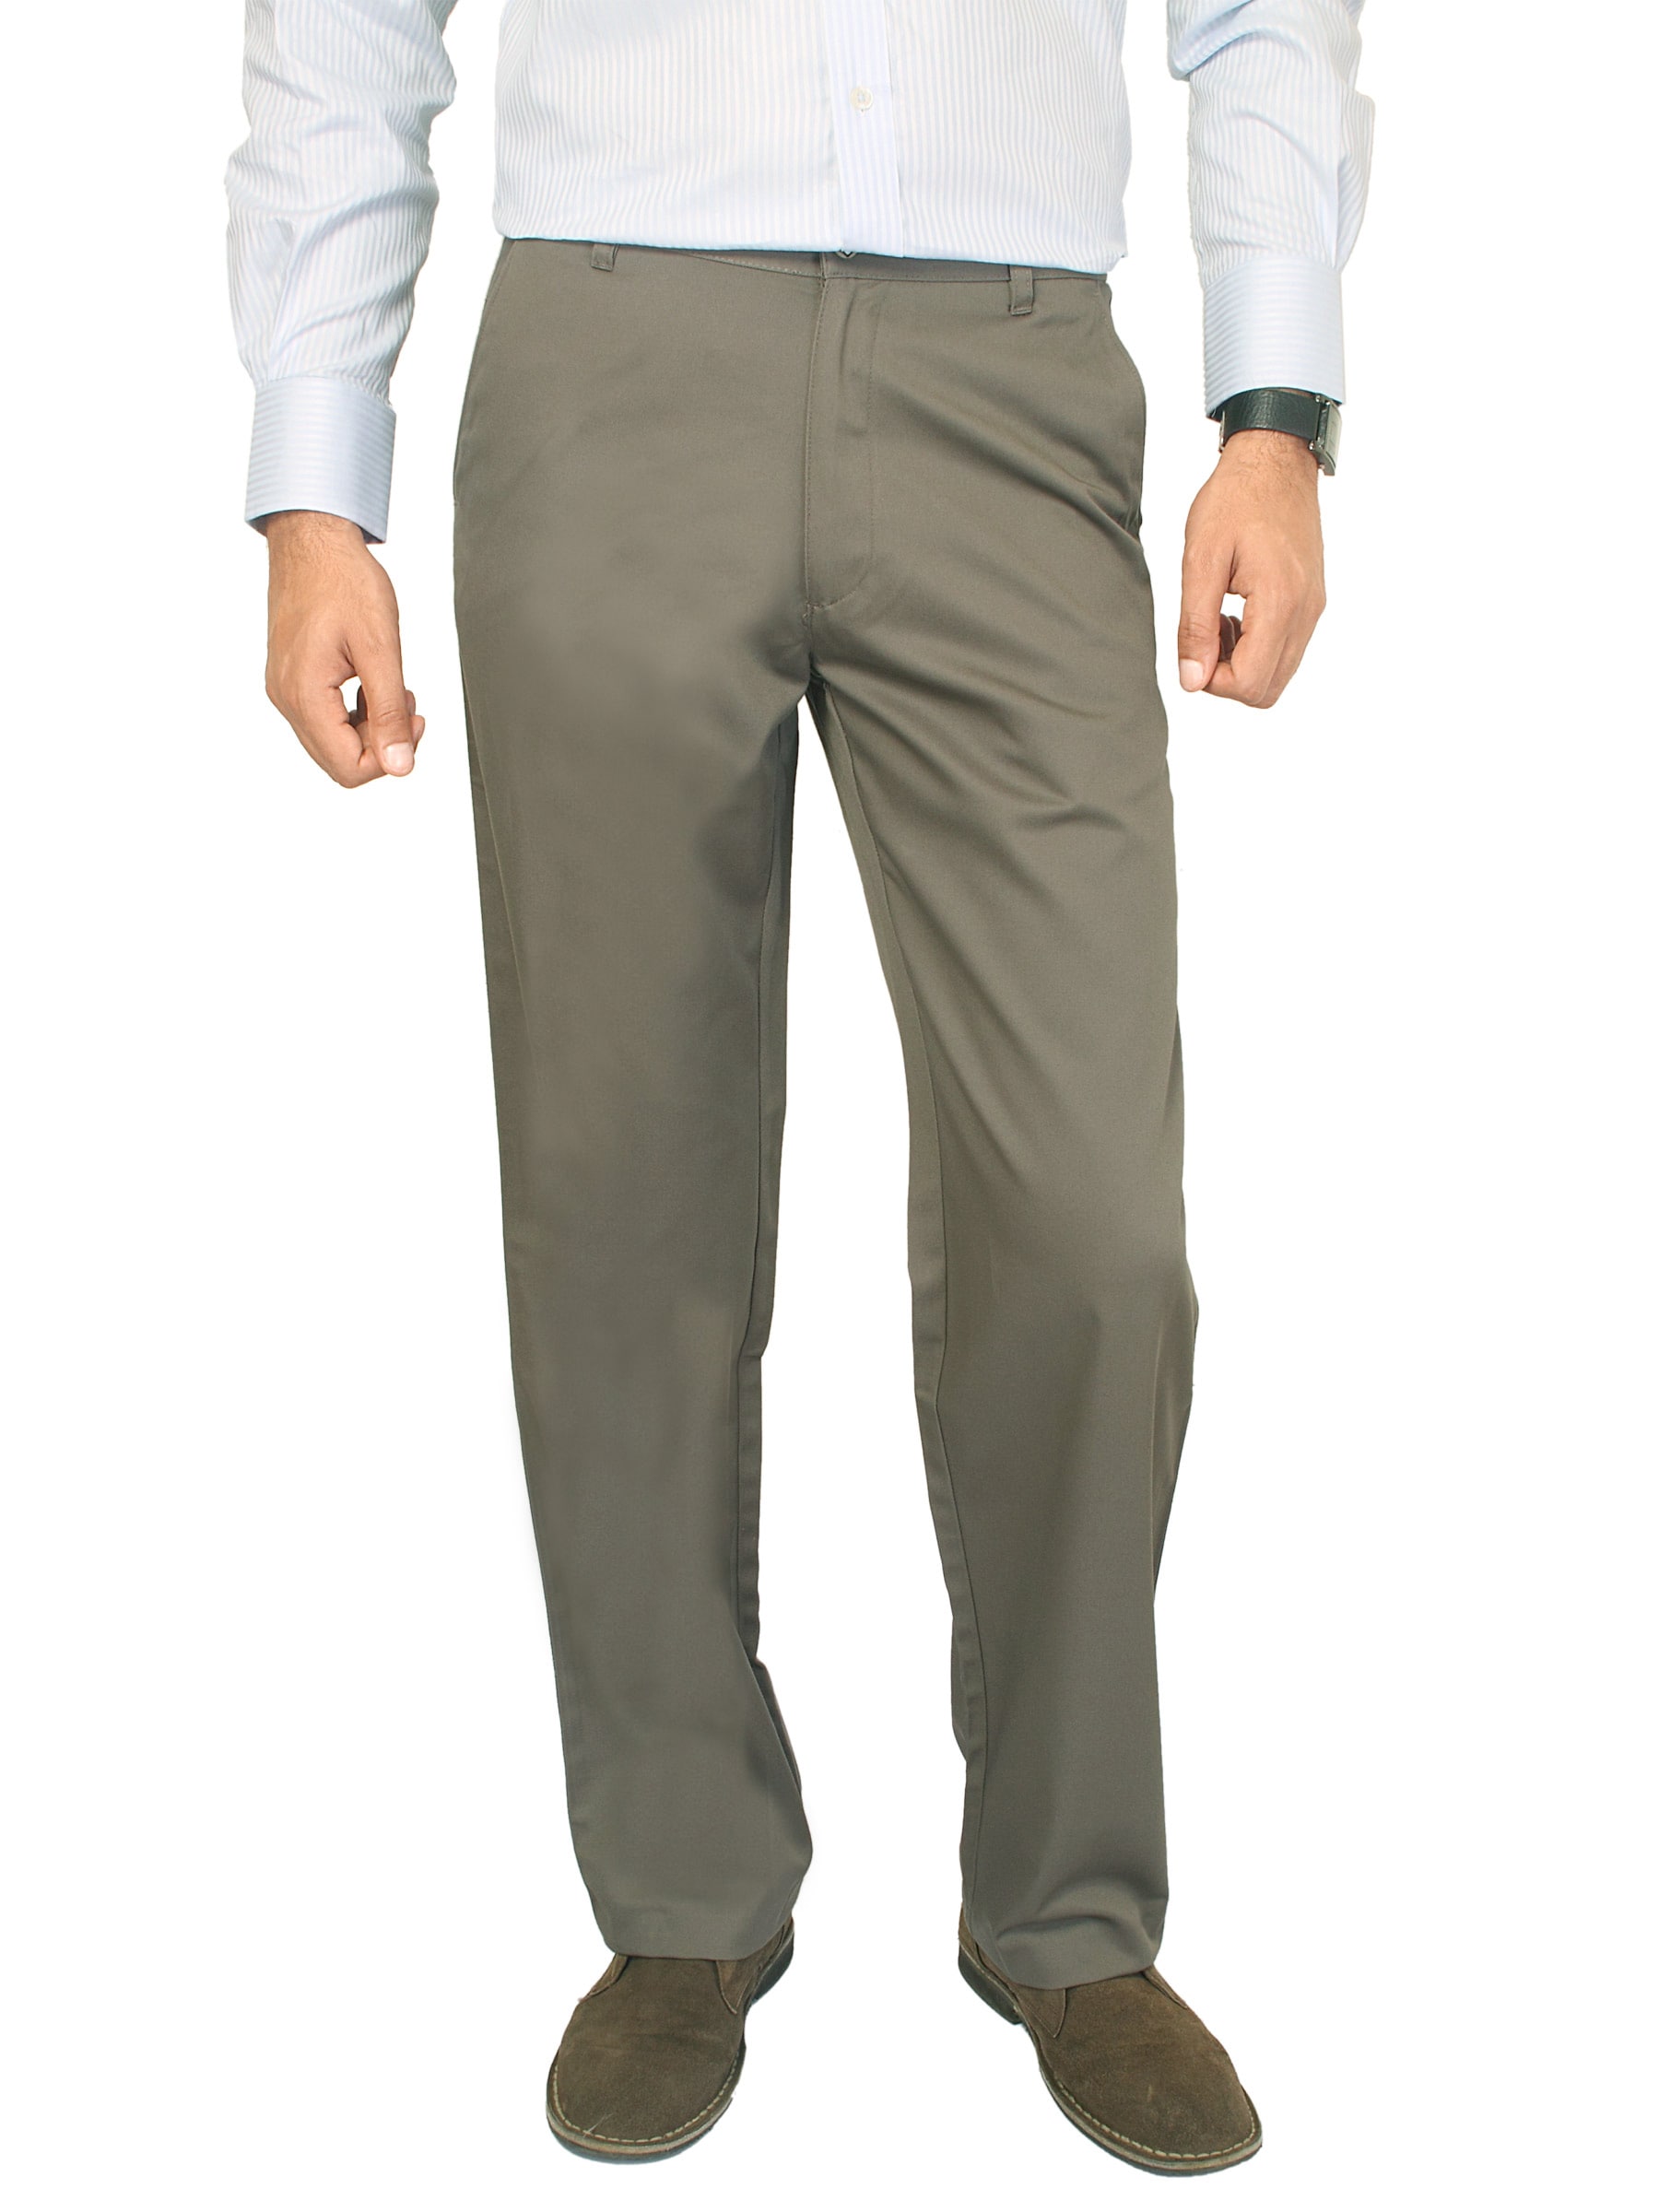 Basics Men Solid Grey Trousers